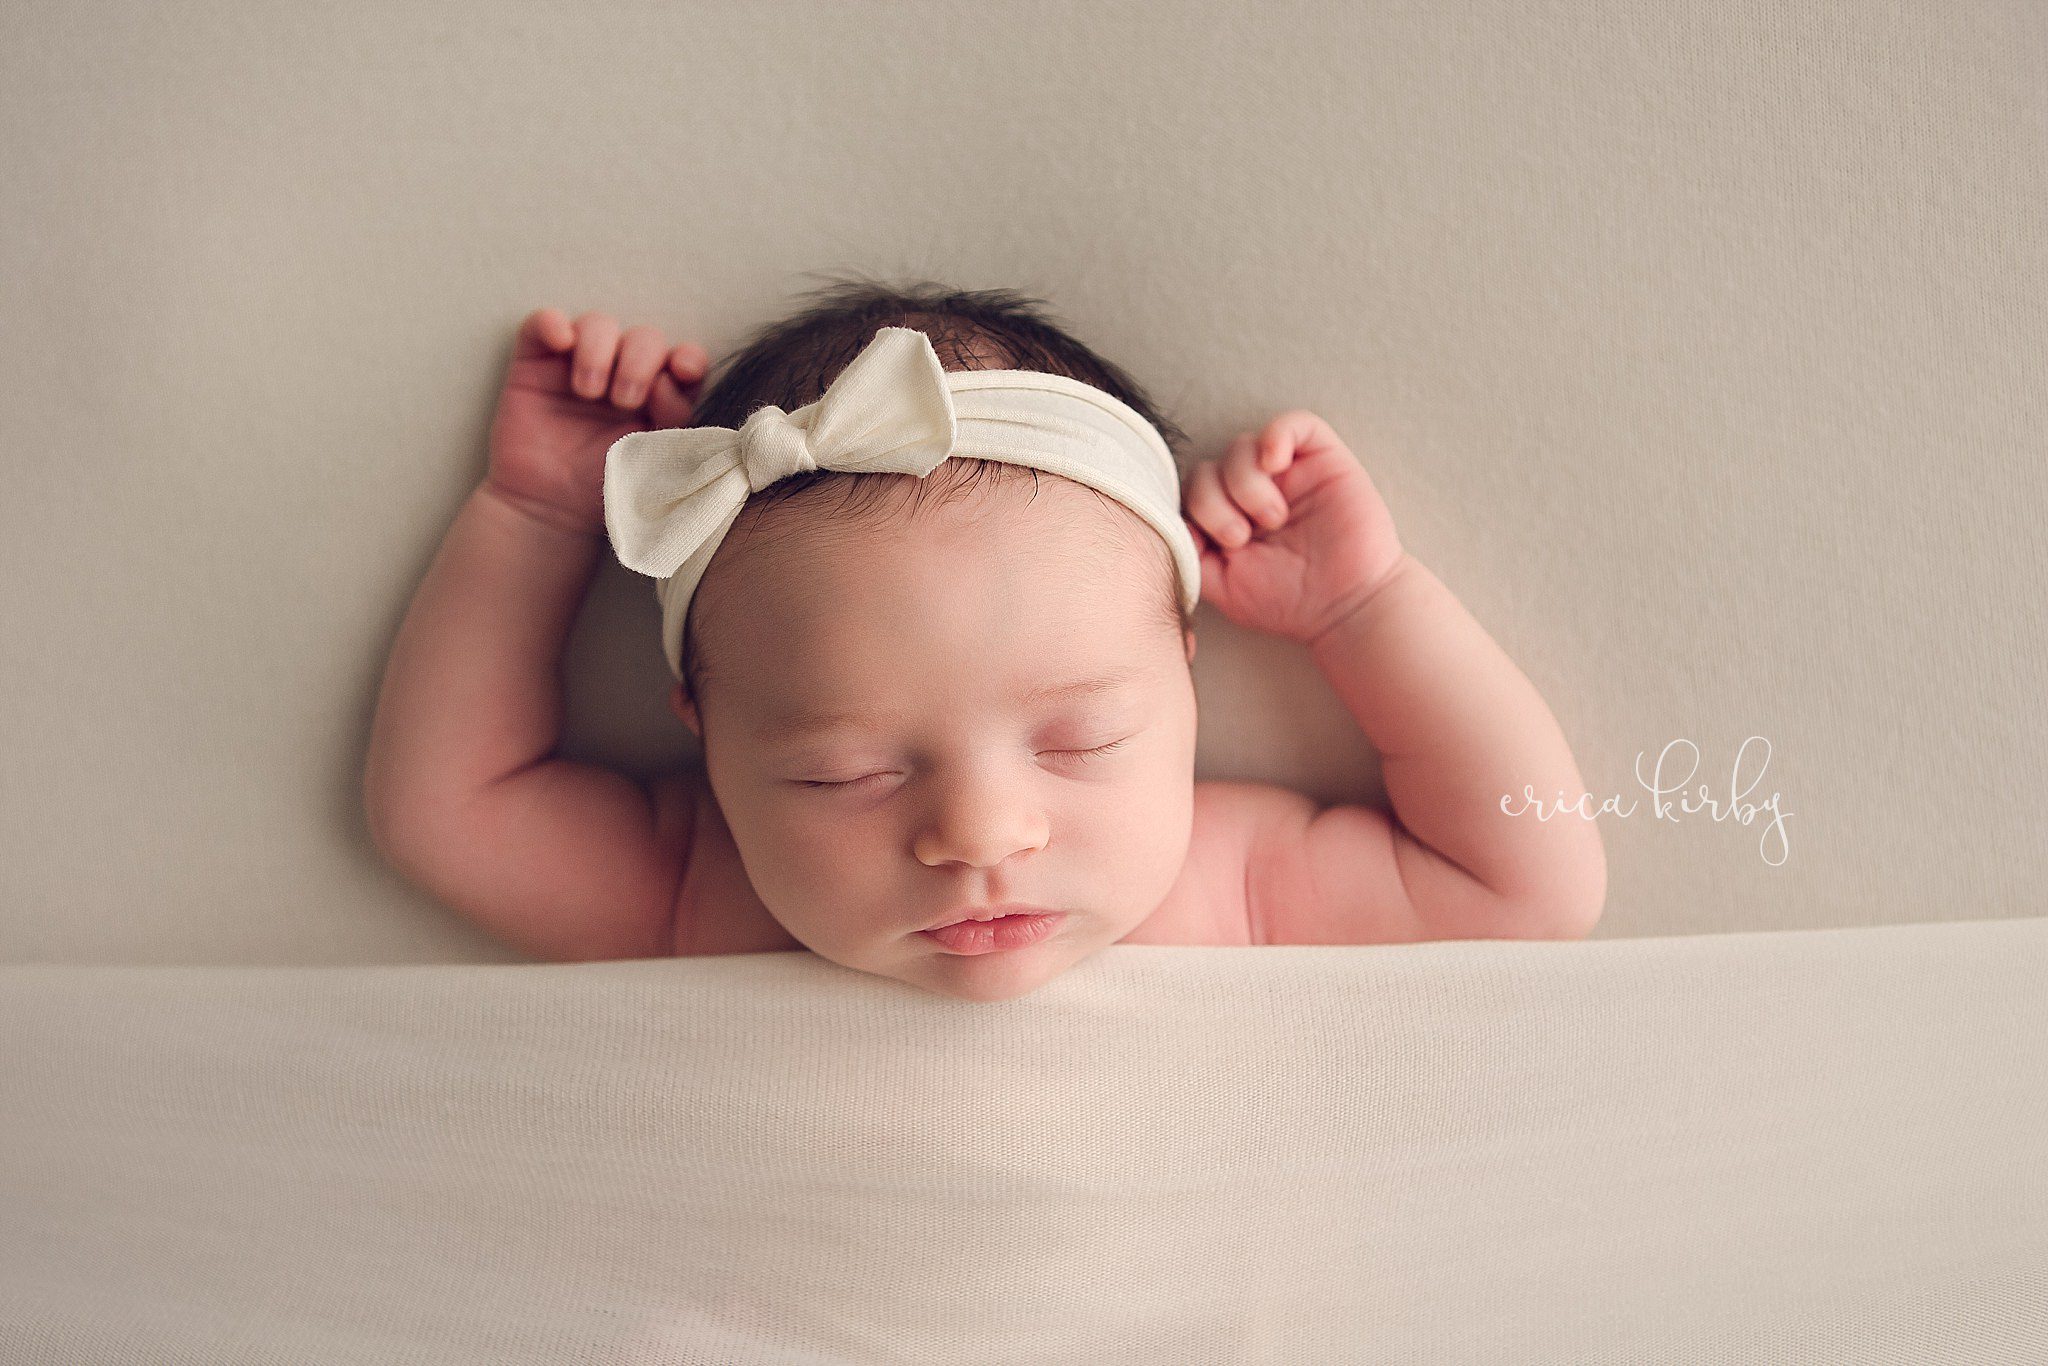 Bentonville Newborn Photography NW Arkansas - Erica kirby photography newborn photo studio baby girl mini session rogers fayetteville fort smith